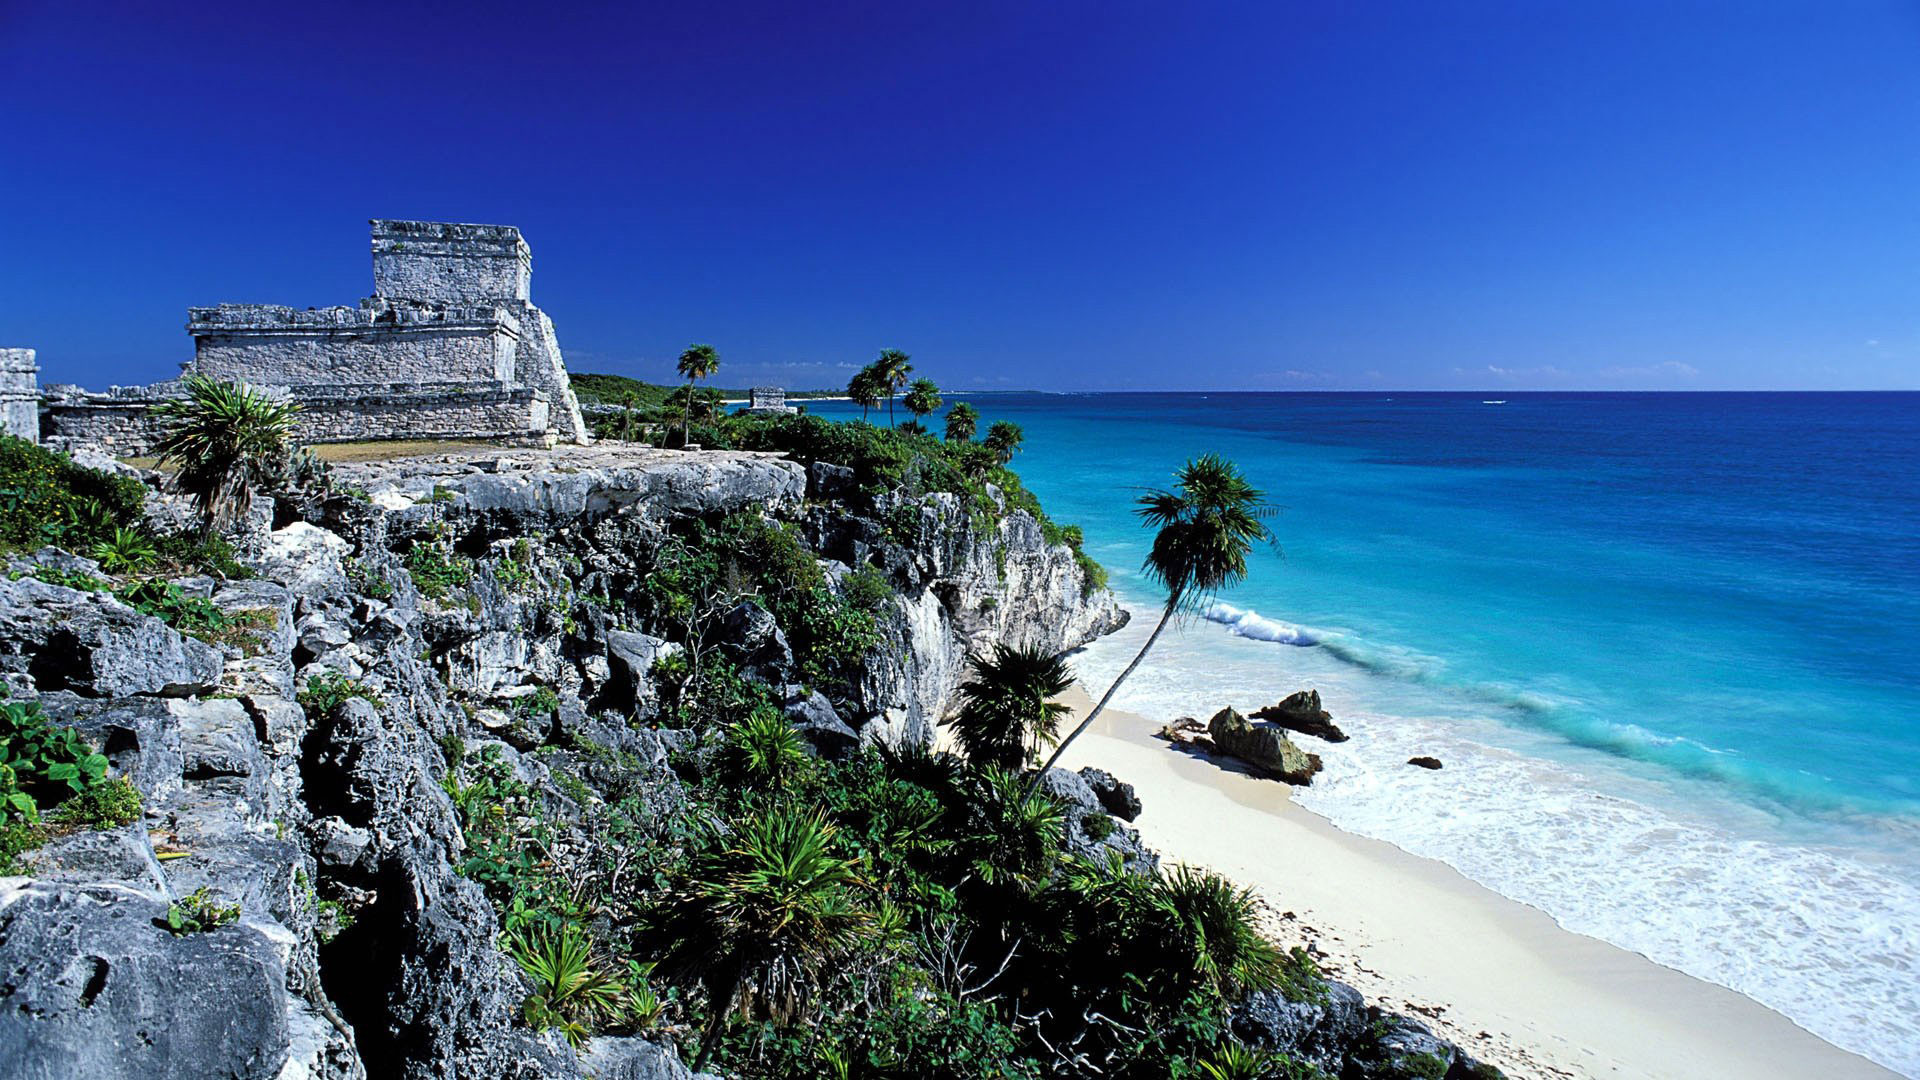 Hd Pics Photos Travel Beach Places Best World Tour - Tulum Mexico - HD Wallpaper 